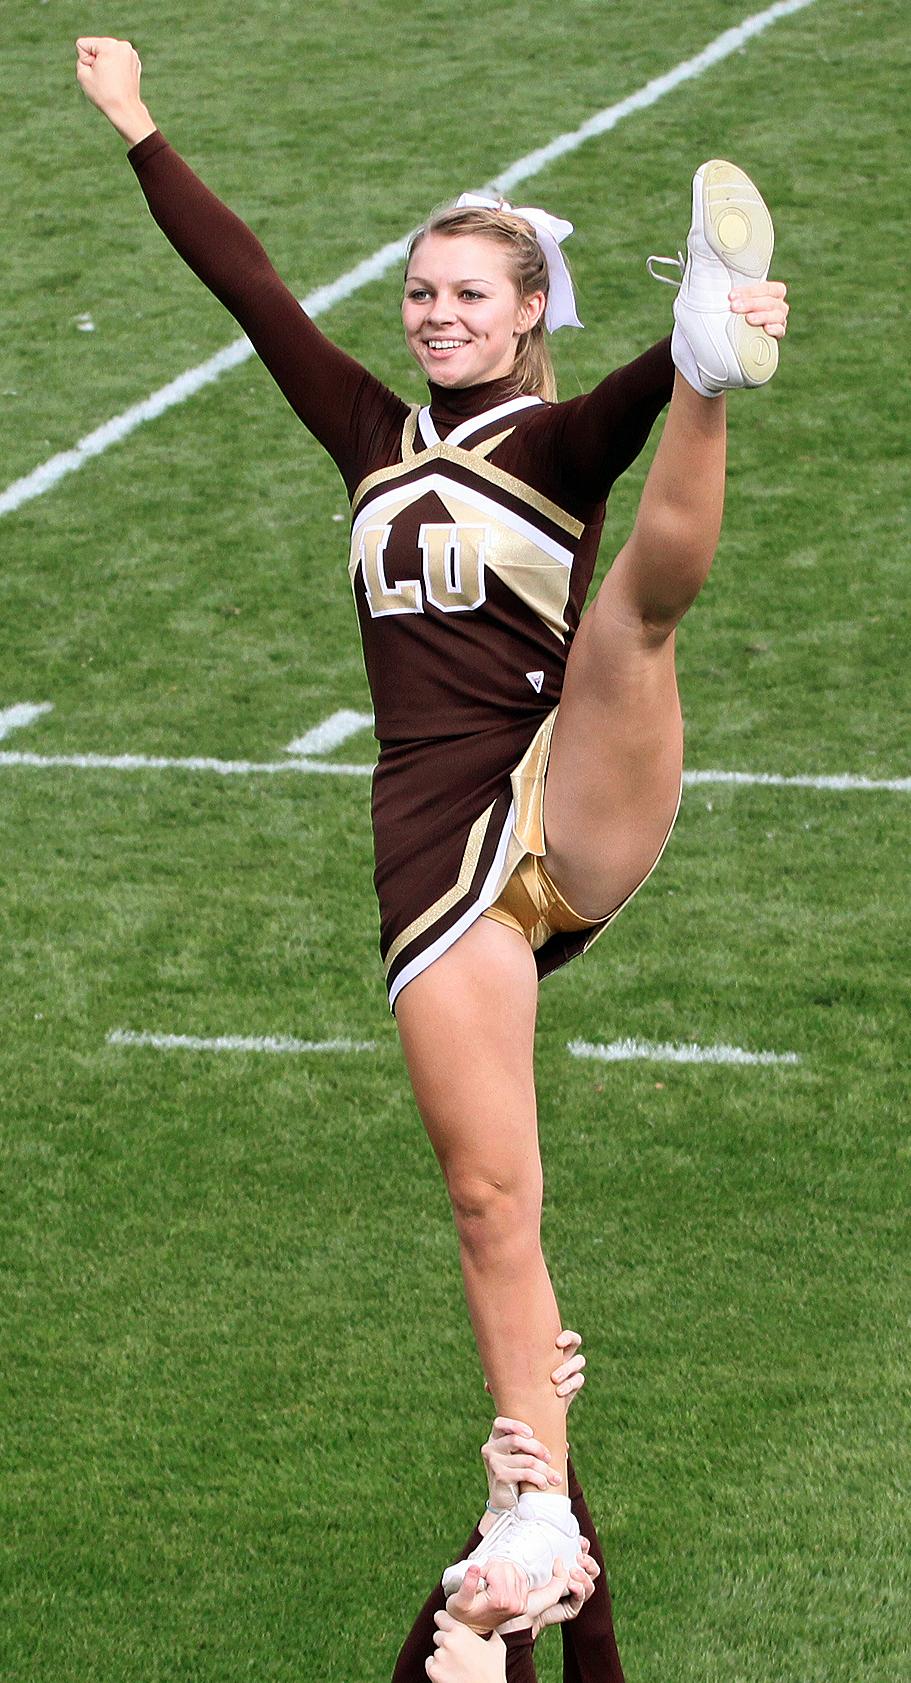 Cheerleader showing Upskirt in Short Dress, Socks and Golden Panties.